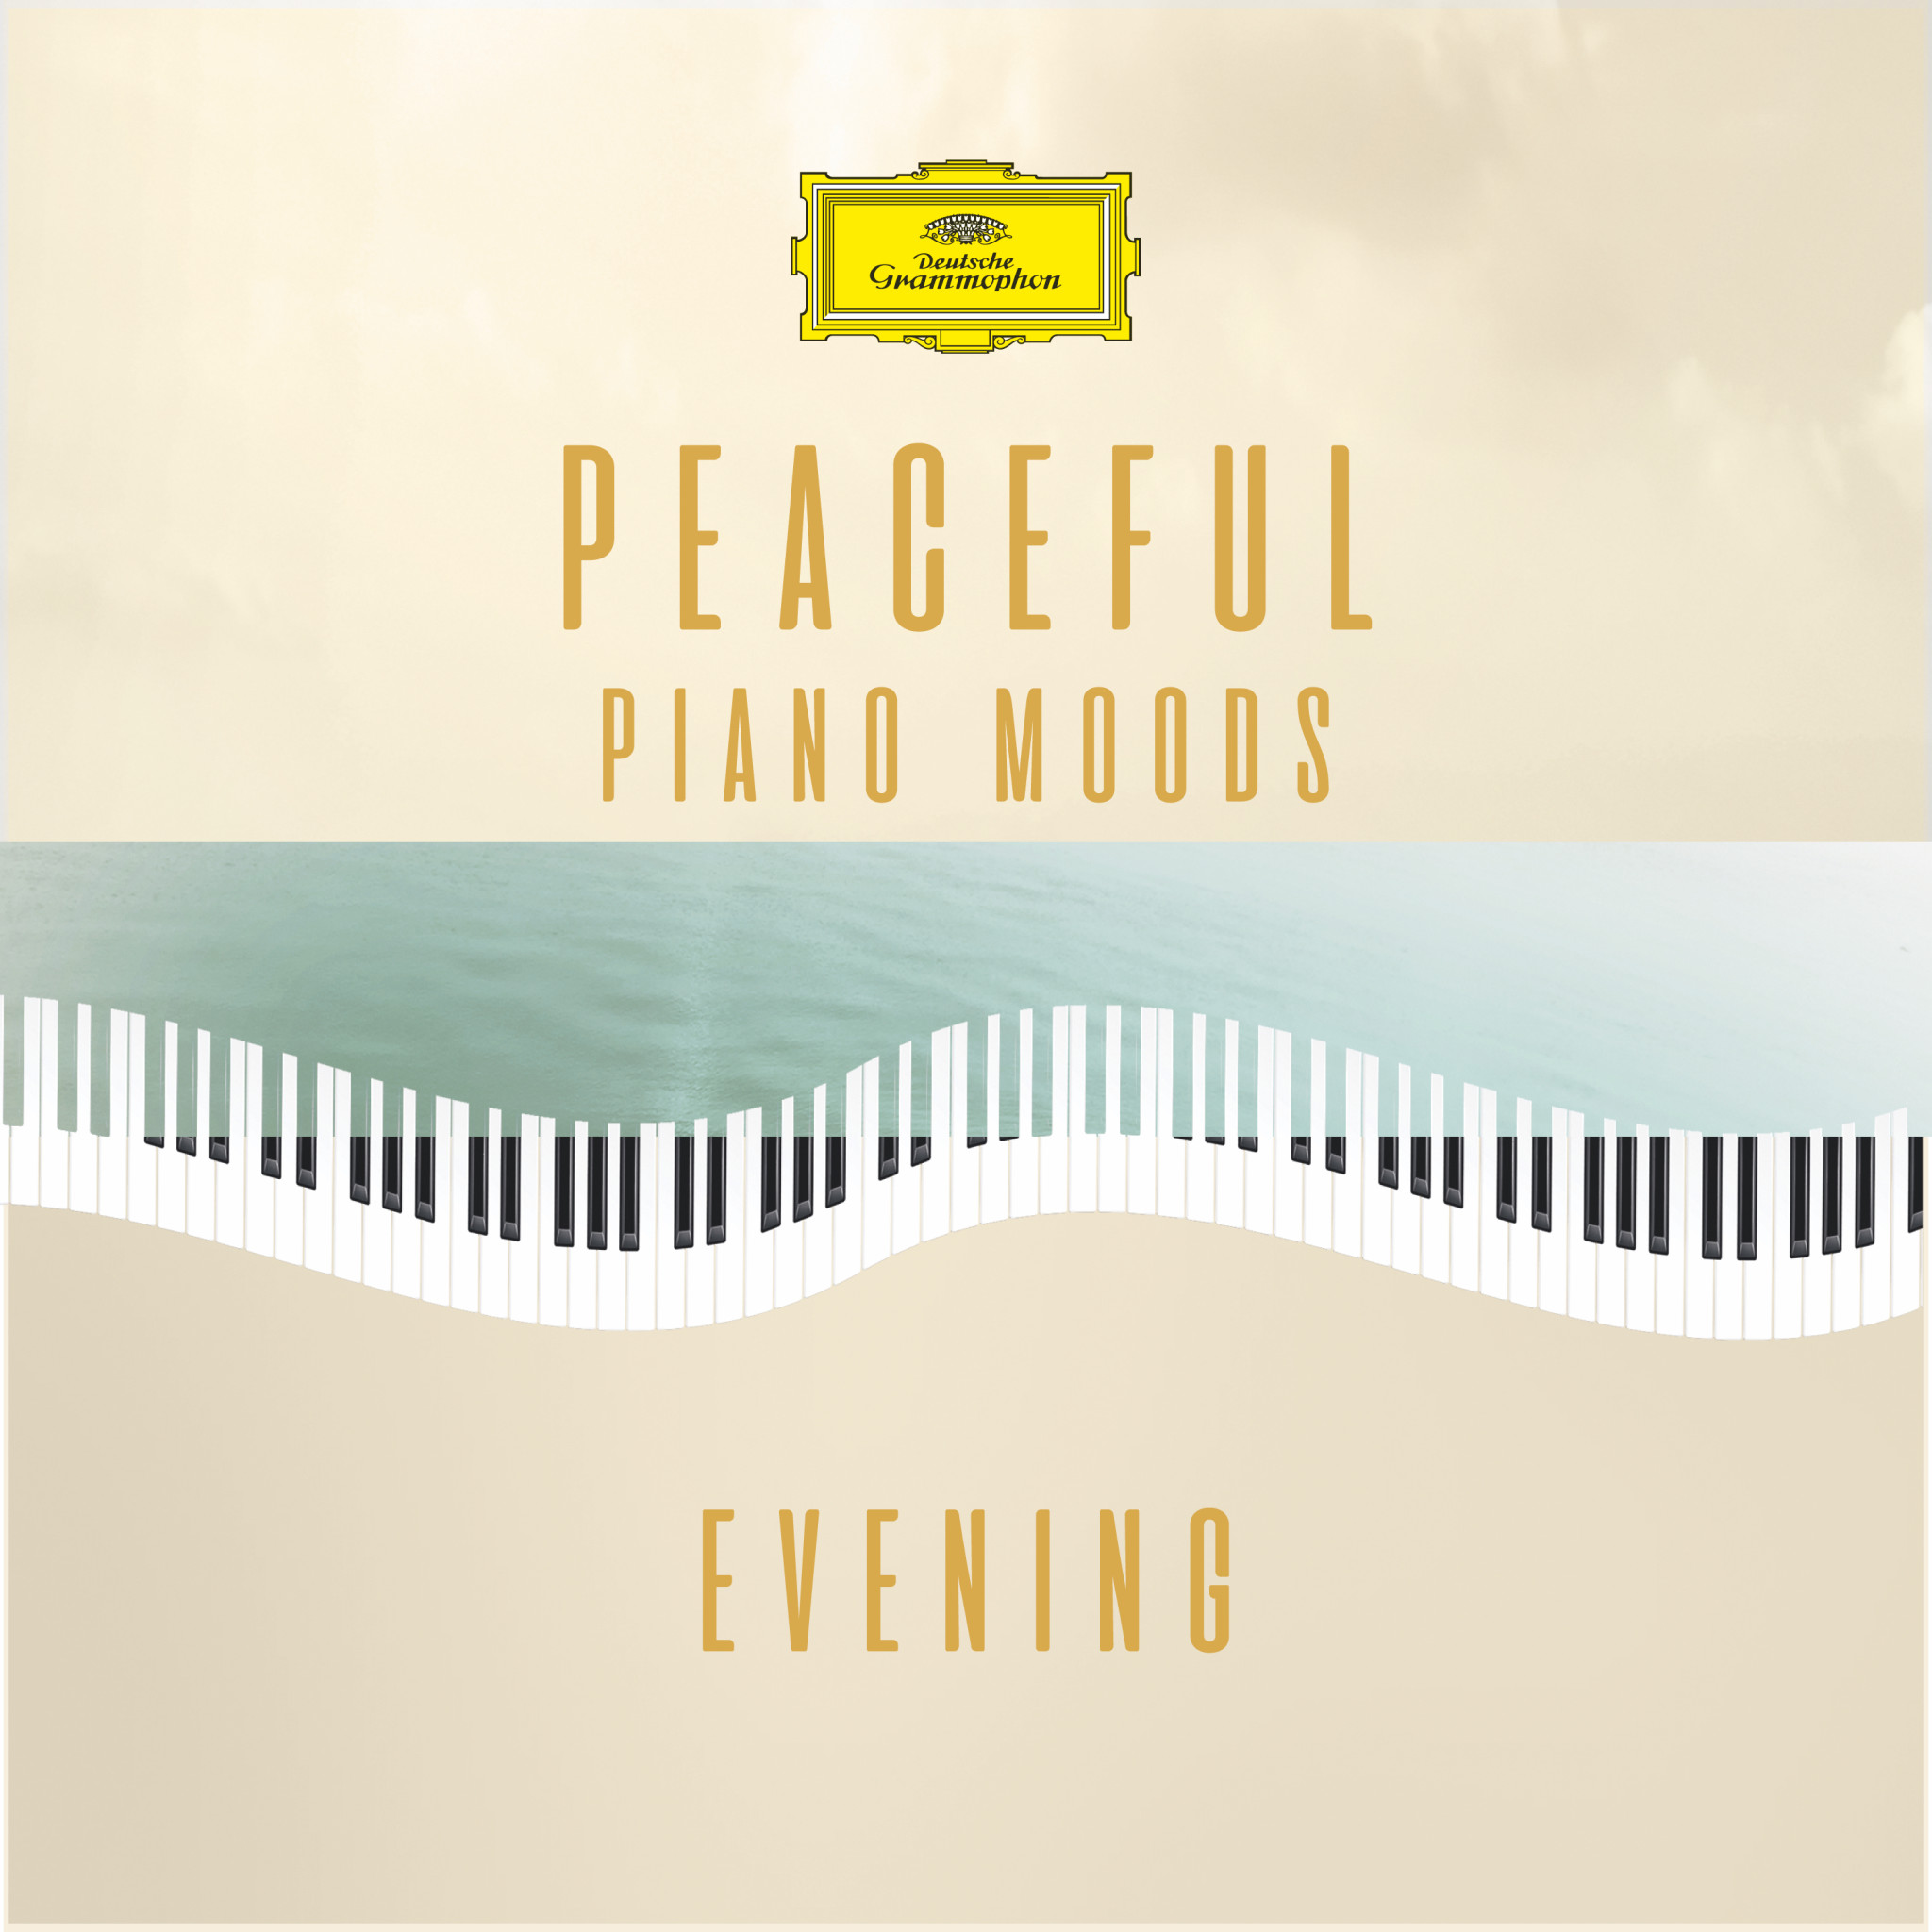 Peaceful Piano Moods "Evening"